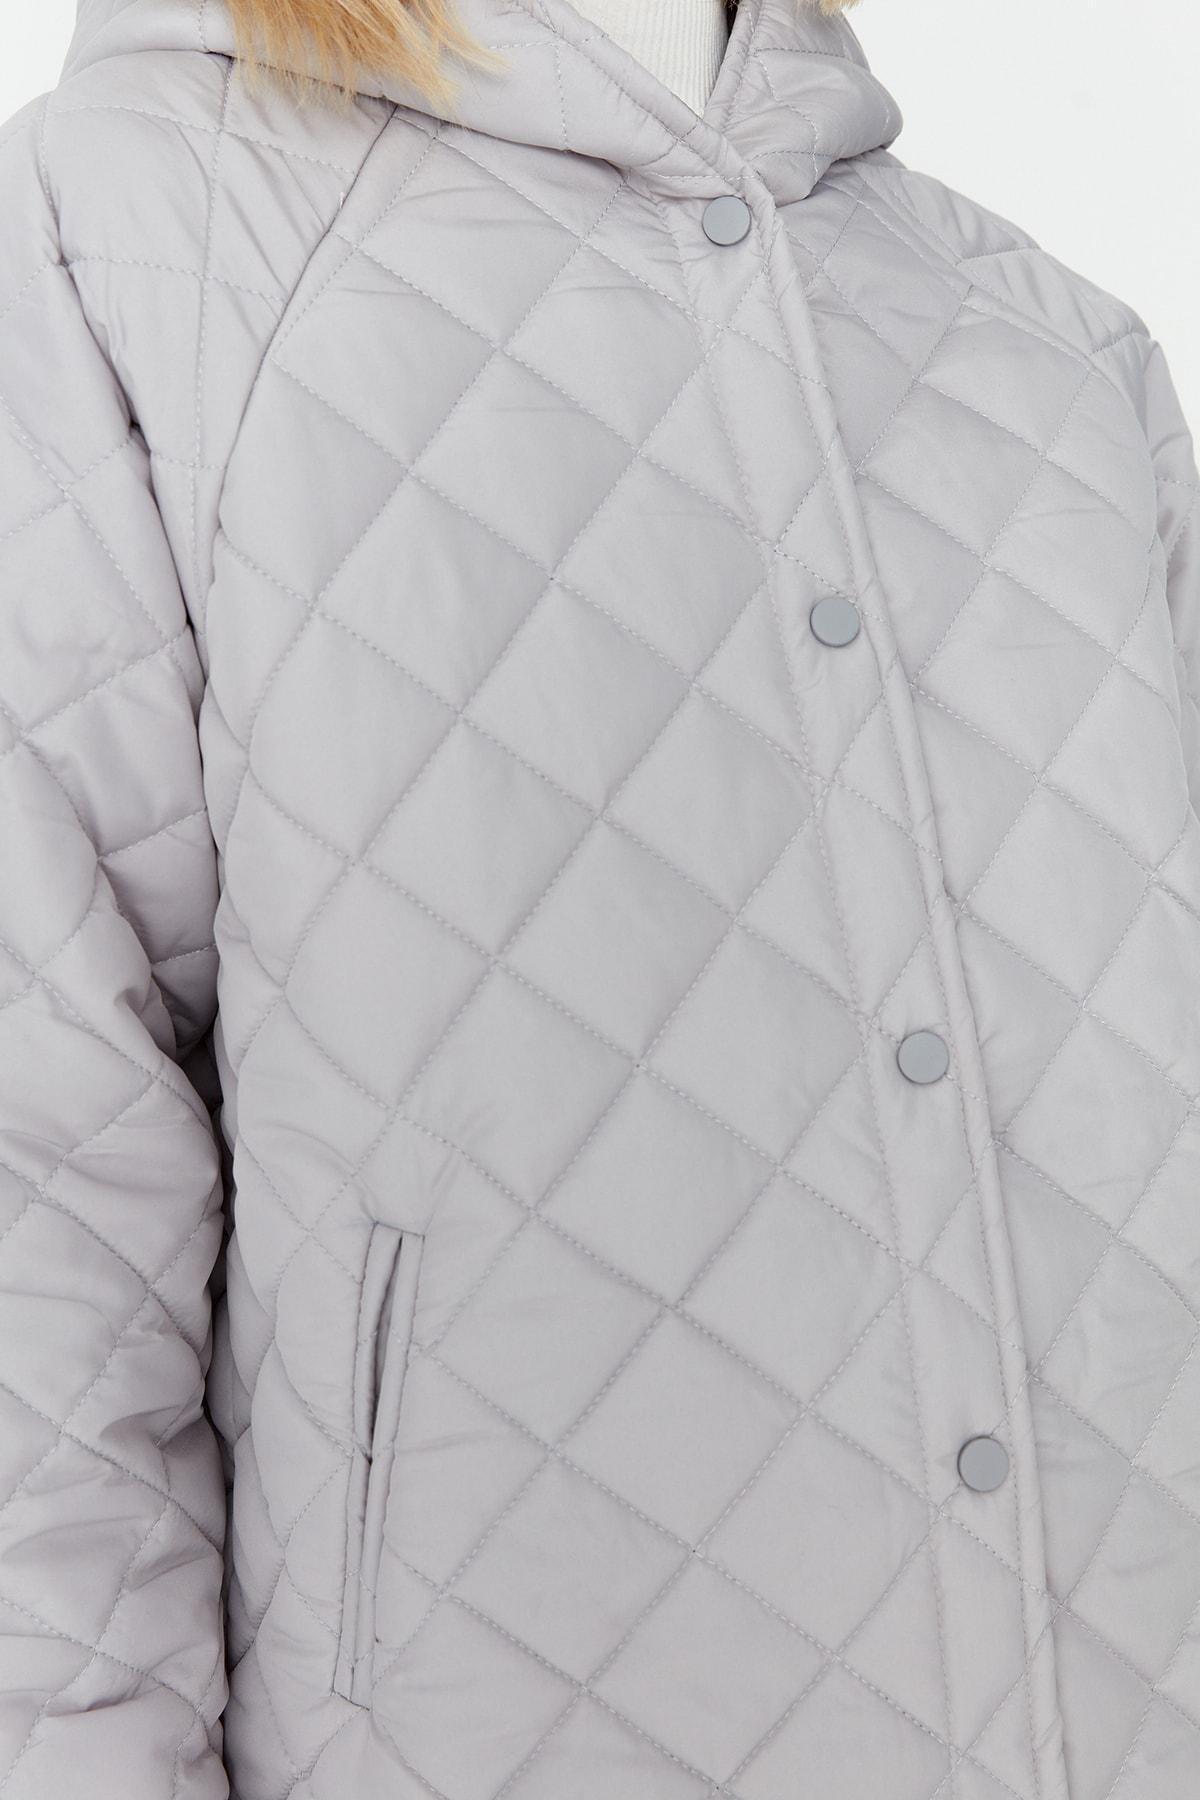 Trendyol - Gray Oversize Puffer Jacket